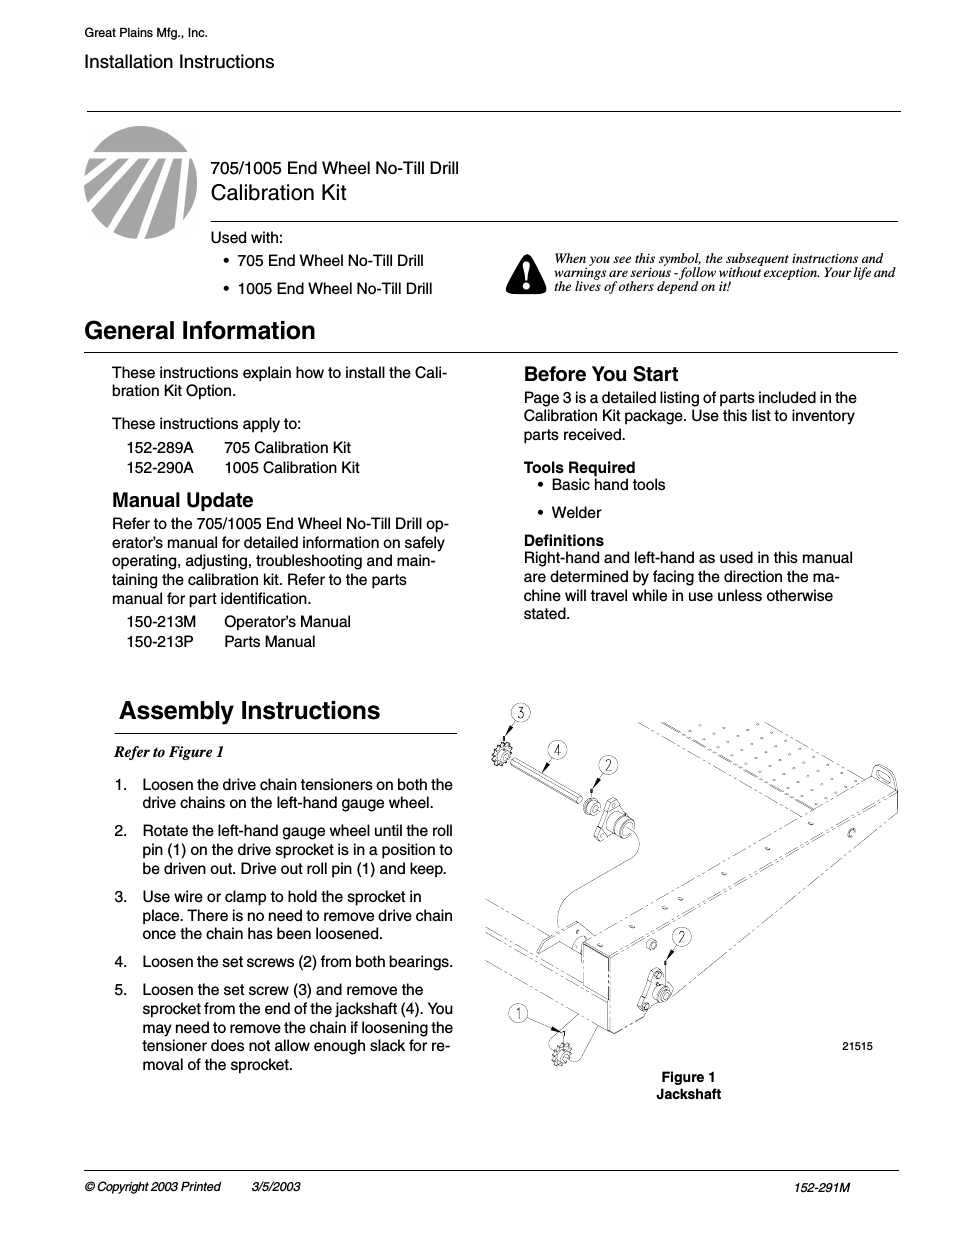 1005 Calibration Kit Assembly Instructions